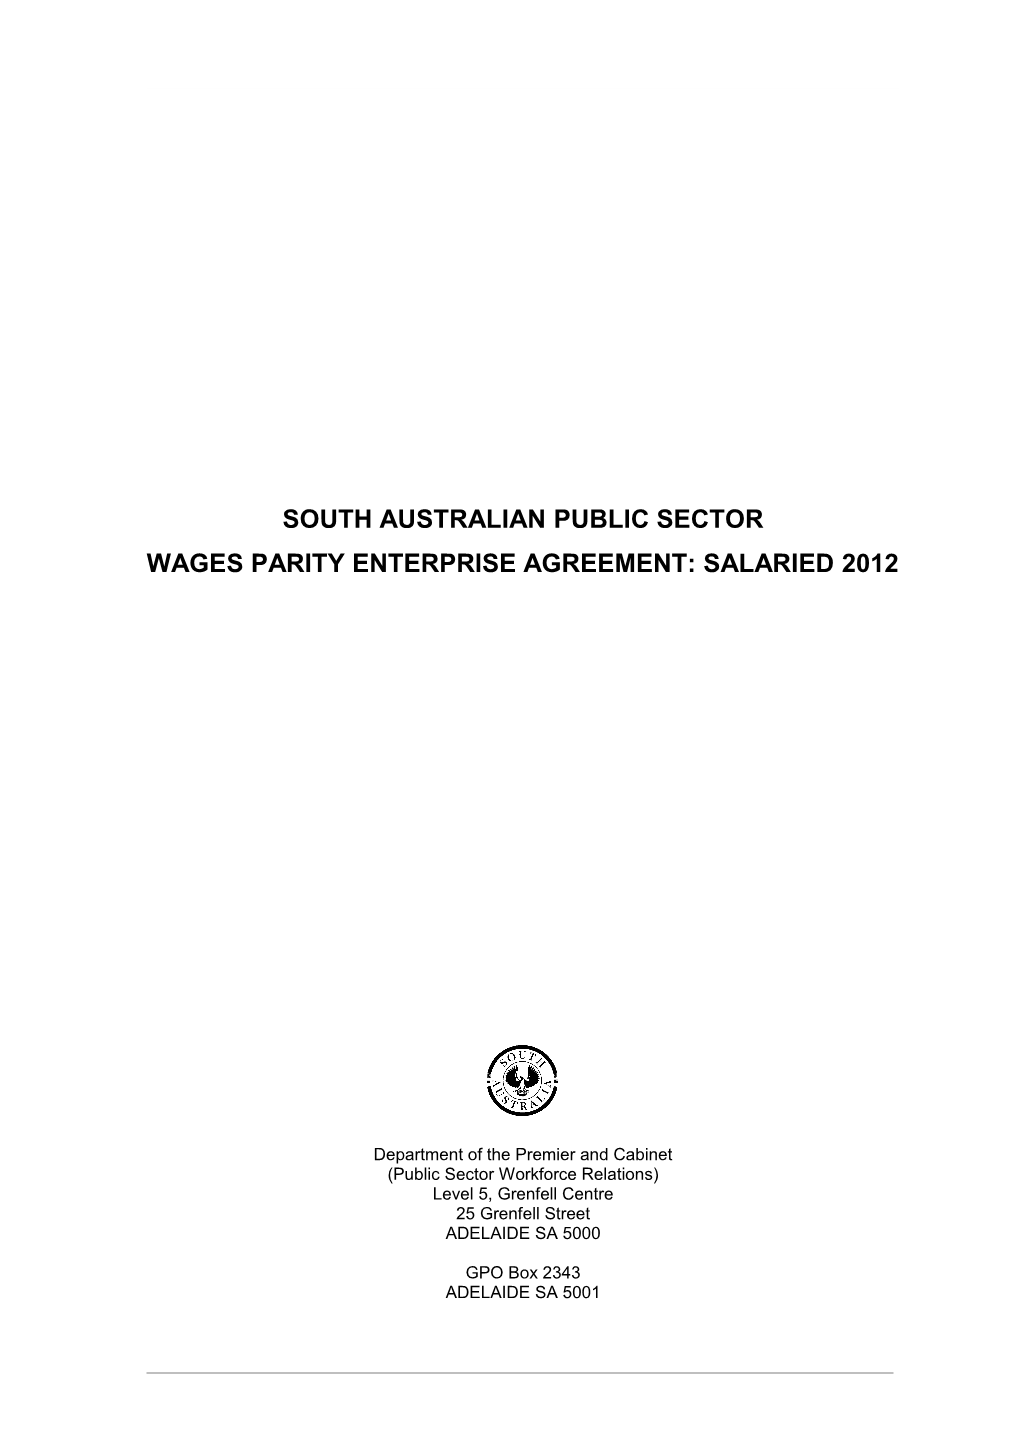 South Australian Government Wages Parity Enterprise Agreement 2001